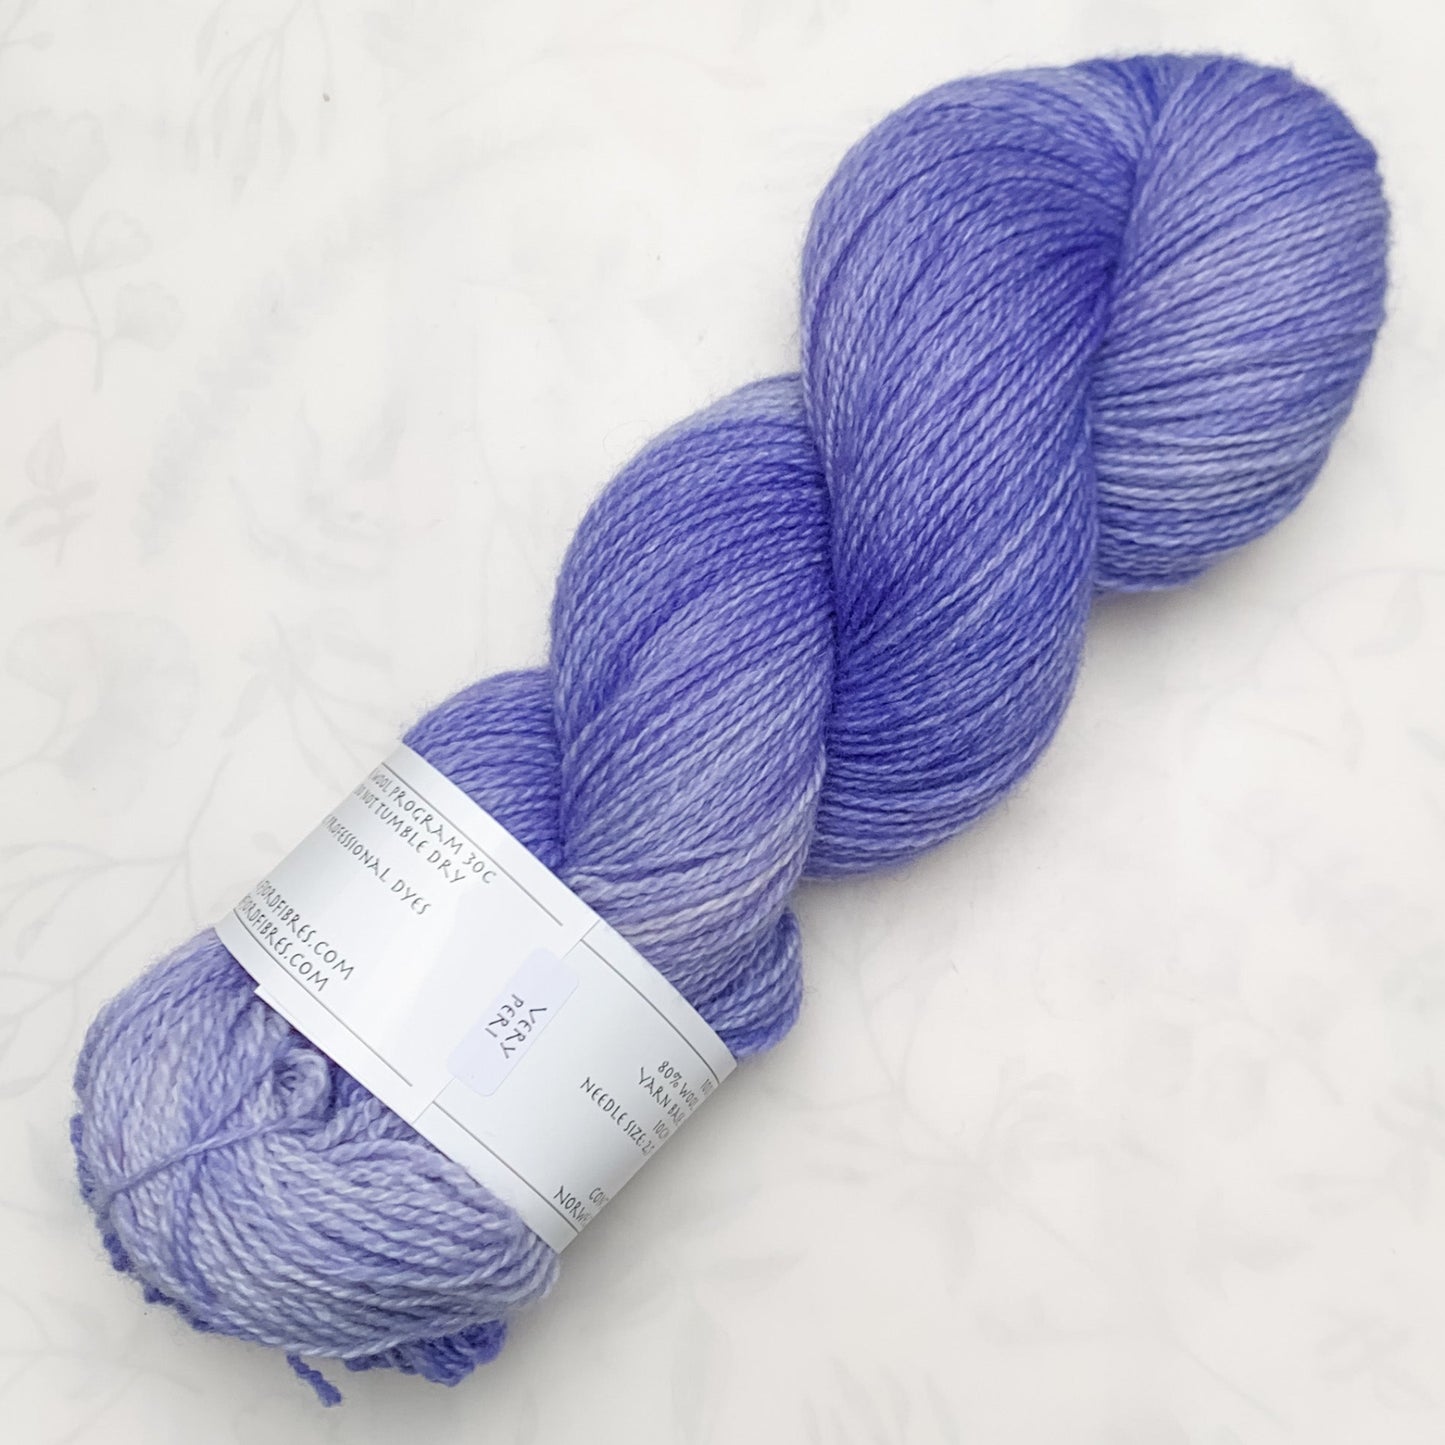 Very Peri - Trollfjord sock - Hand Dyed Yarn - Variegated Yarn